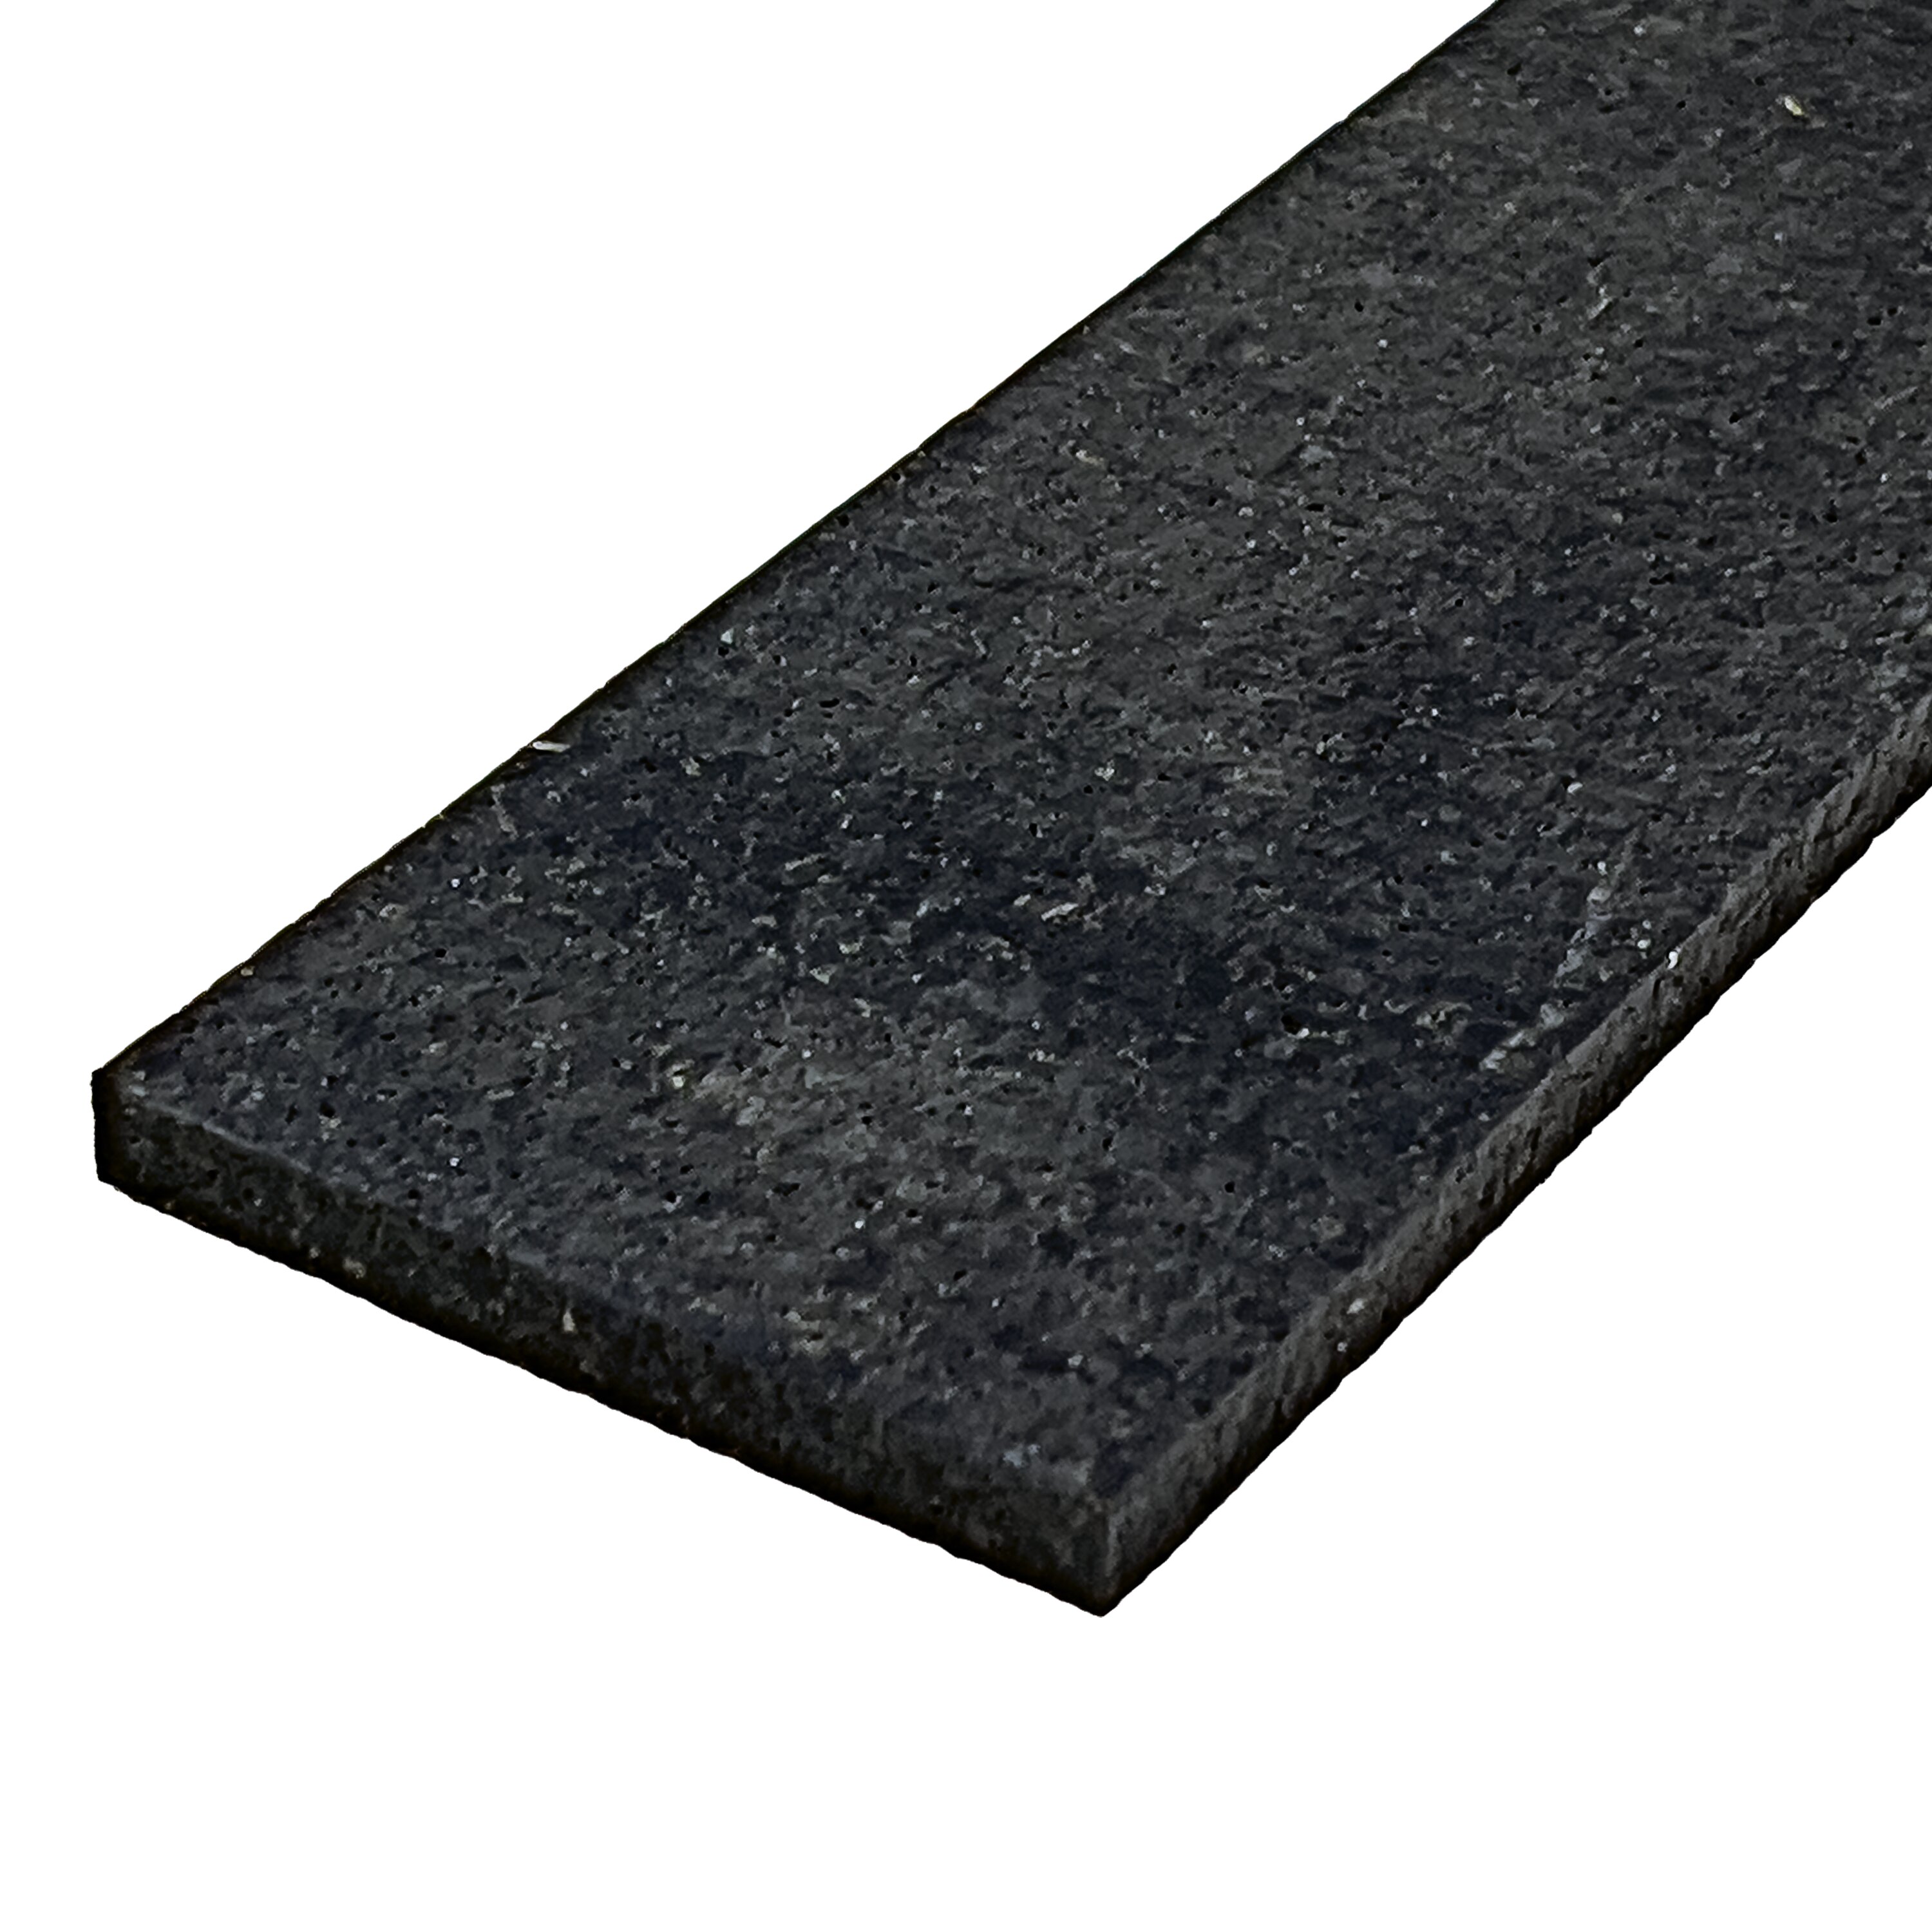 Čierna gumová soklová podlahová lišta FLOMA FitFlo IceFlo - dĺžka 200 cm, šírka 7 cm, hrúbka 0,8 cm